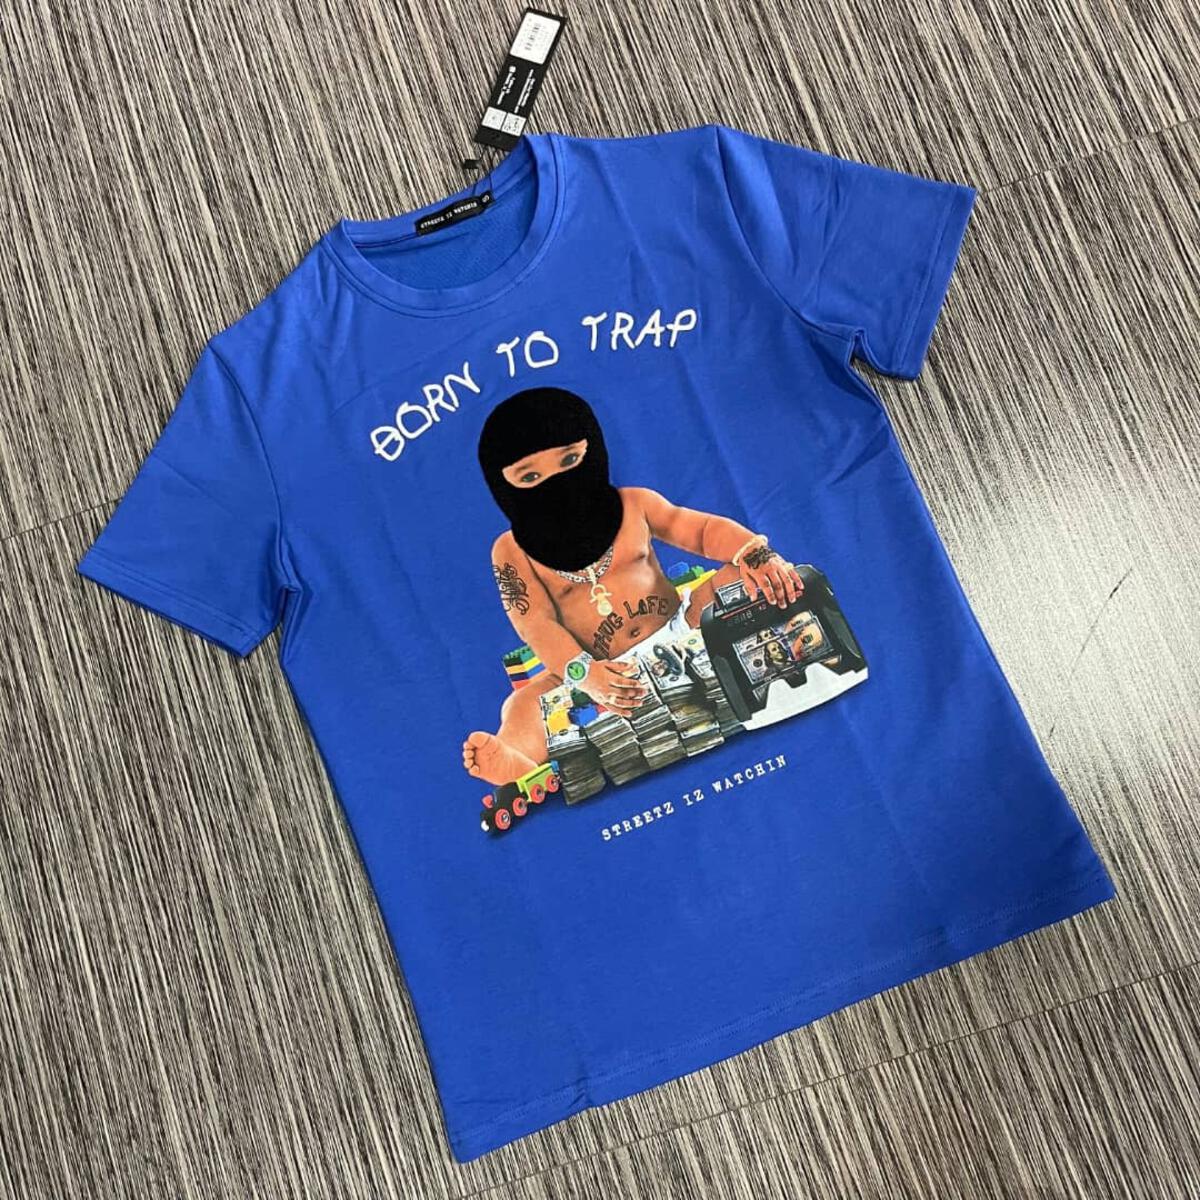 Streetz Iz Watchin - Trap Baby 2 T-Shirt